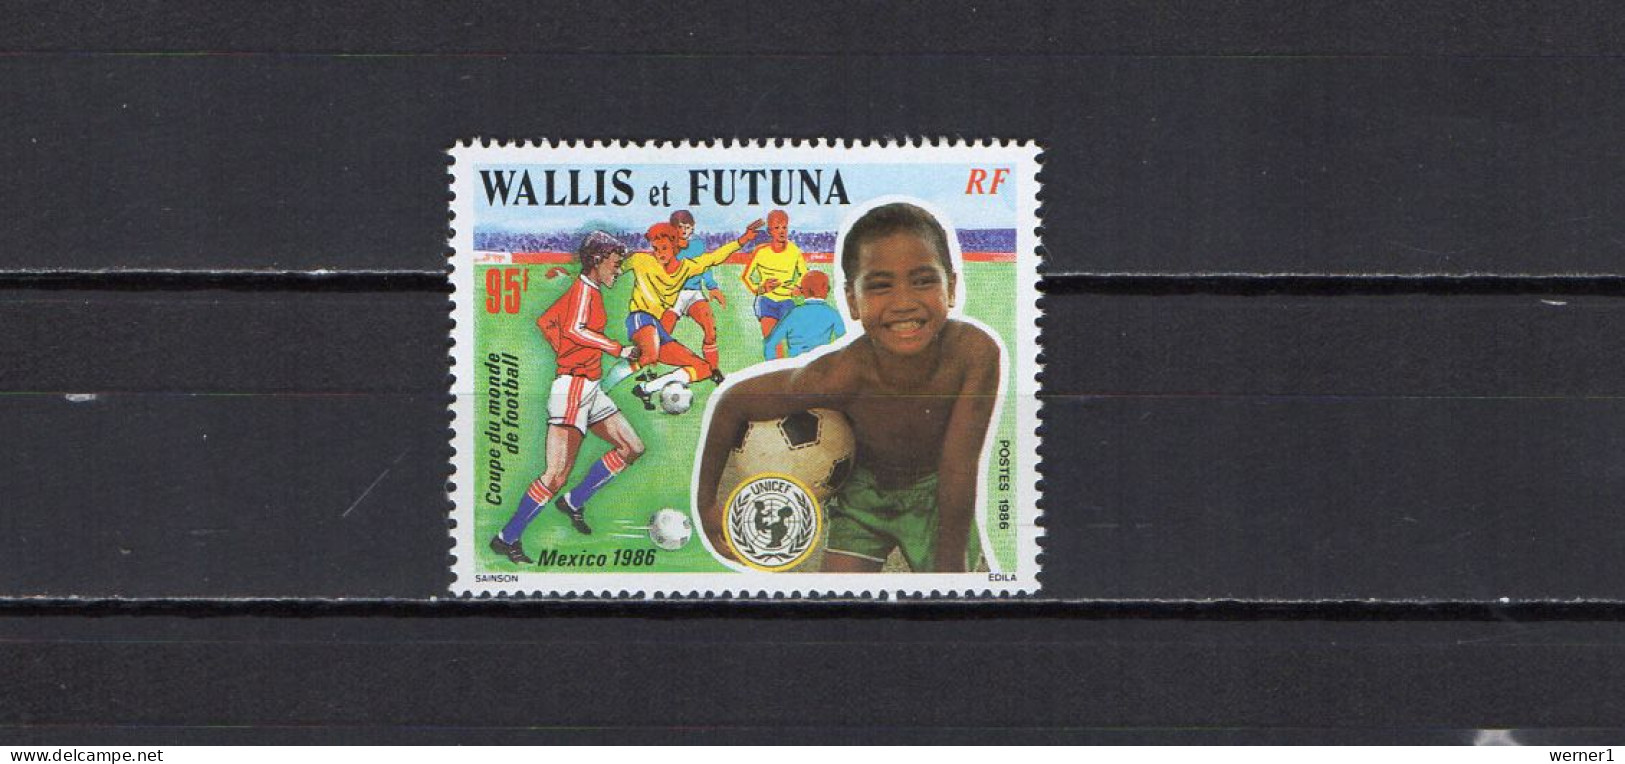 Wallis & Futuna 1986 Football Soccer World Cup Stamp MNH - 1986 – Mexico